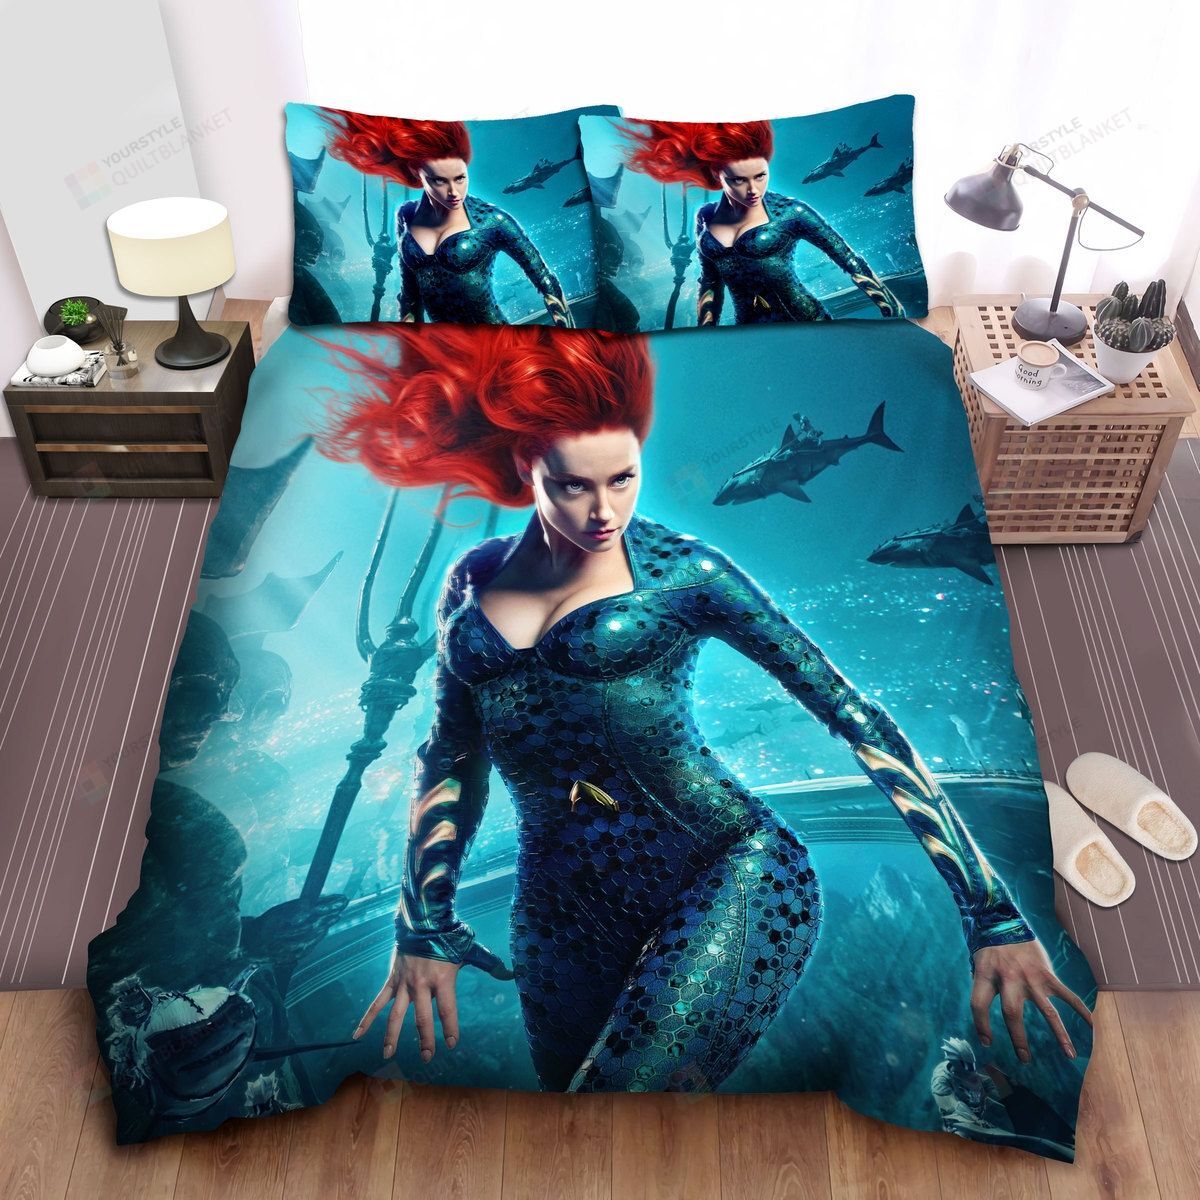 Mera The Queen Of Atlantis Digital Illustration Bed Sheets Spread Comforter Duvet Cover Bedding Sets